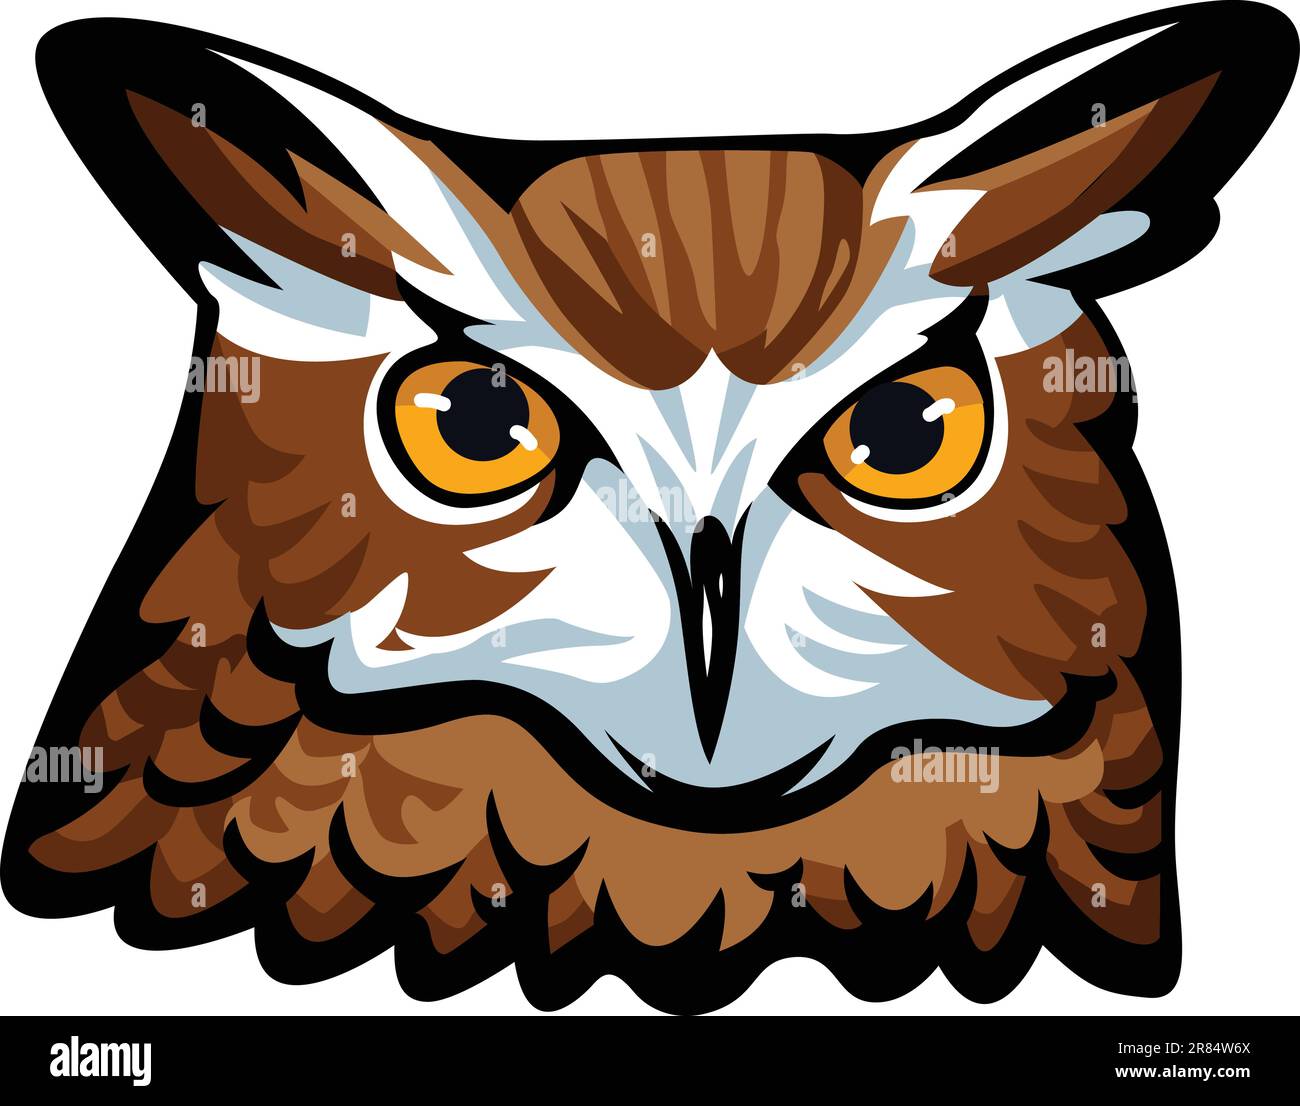 Owl Face Illustration. Sky. Forest. Vector Stock Vector